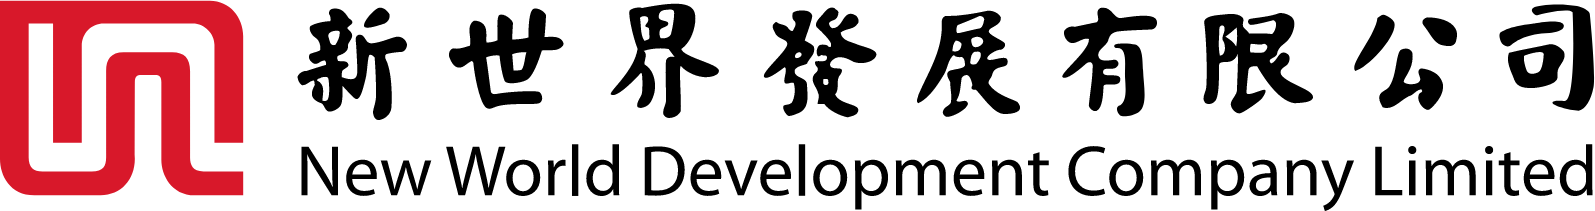 New World Development Company logo large (transparent PNG)